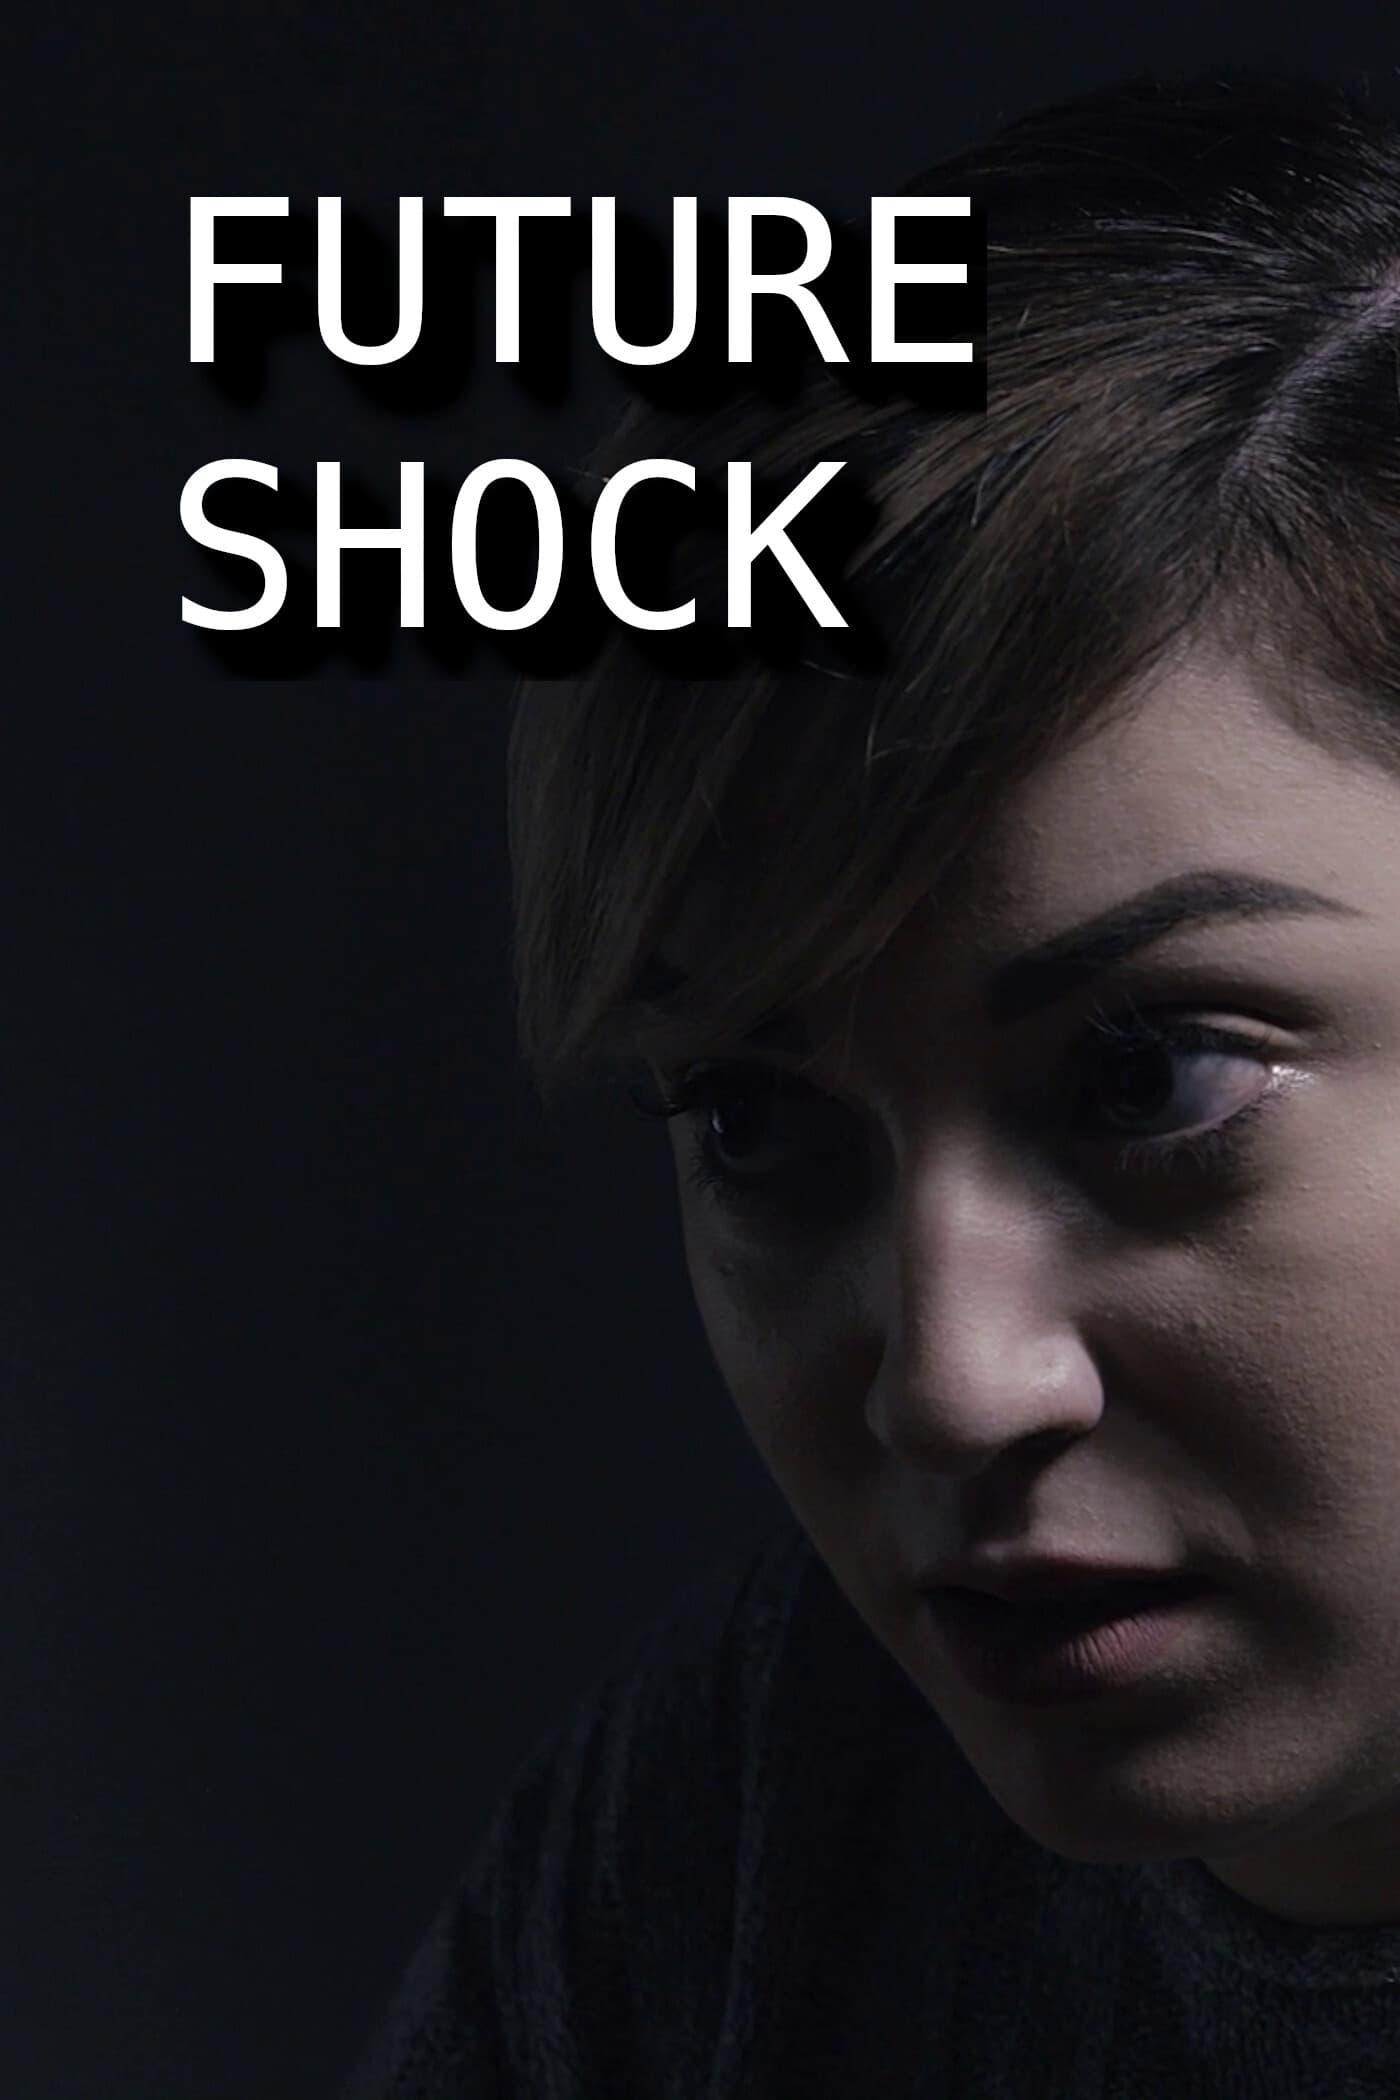 Future Shock poster